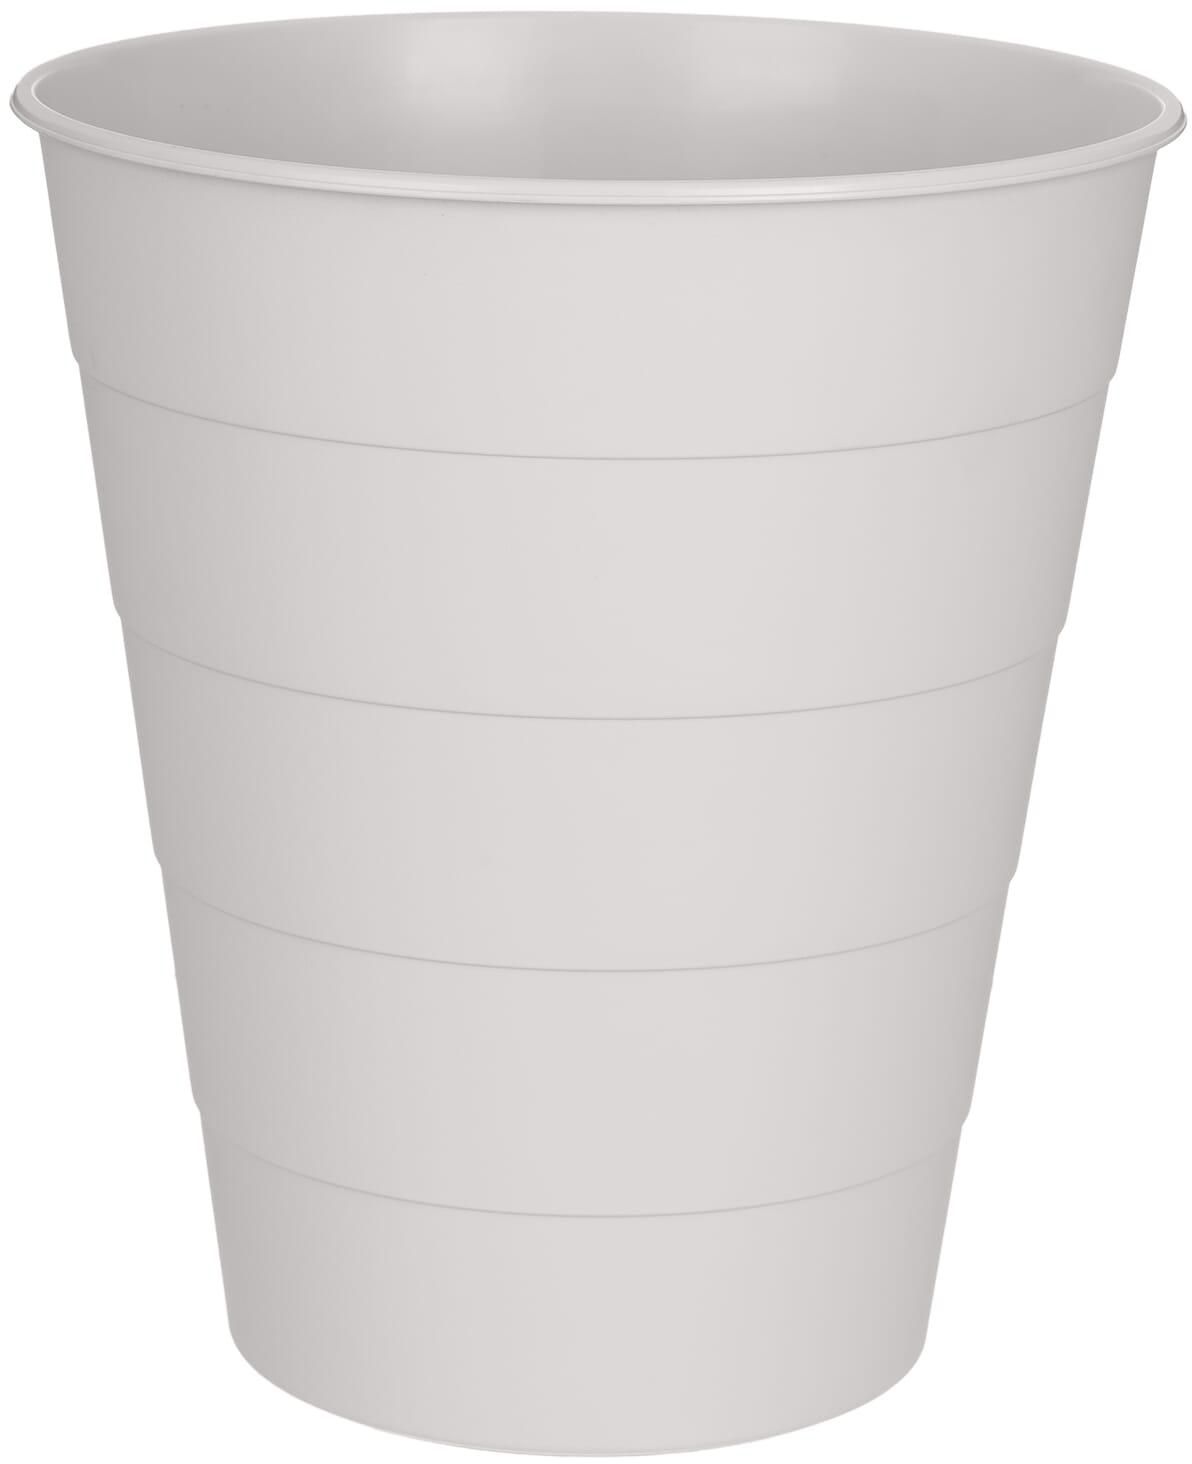 Get Aksa Round Plastic Trash Bin, 10 Liters - Off White with best offers | Raneen.com